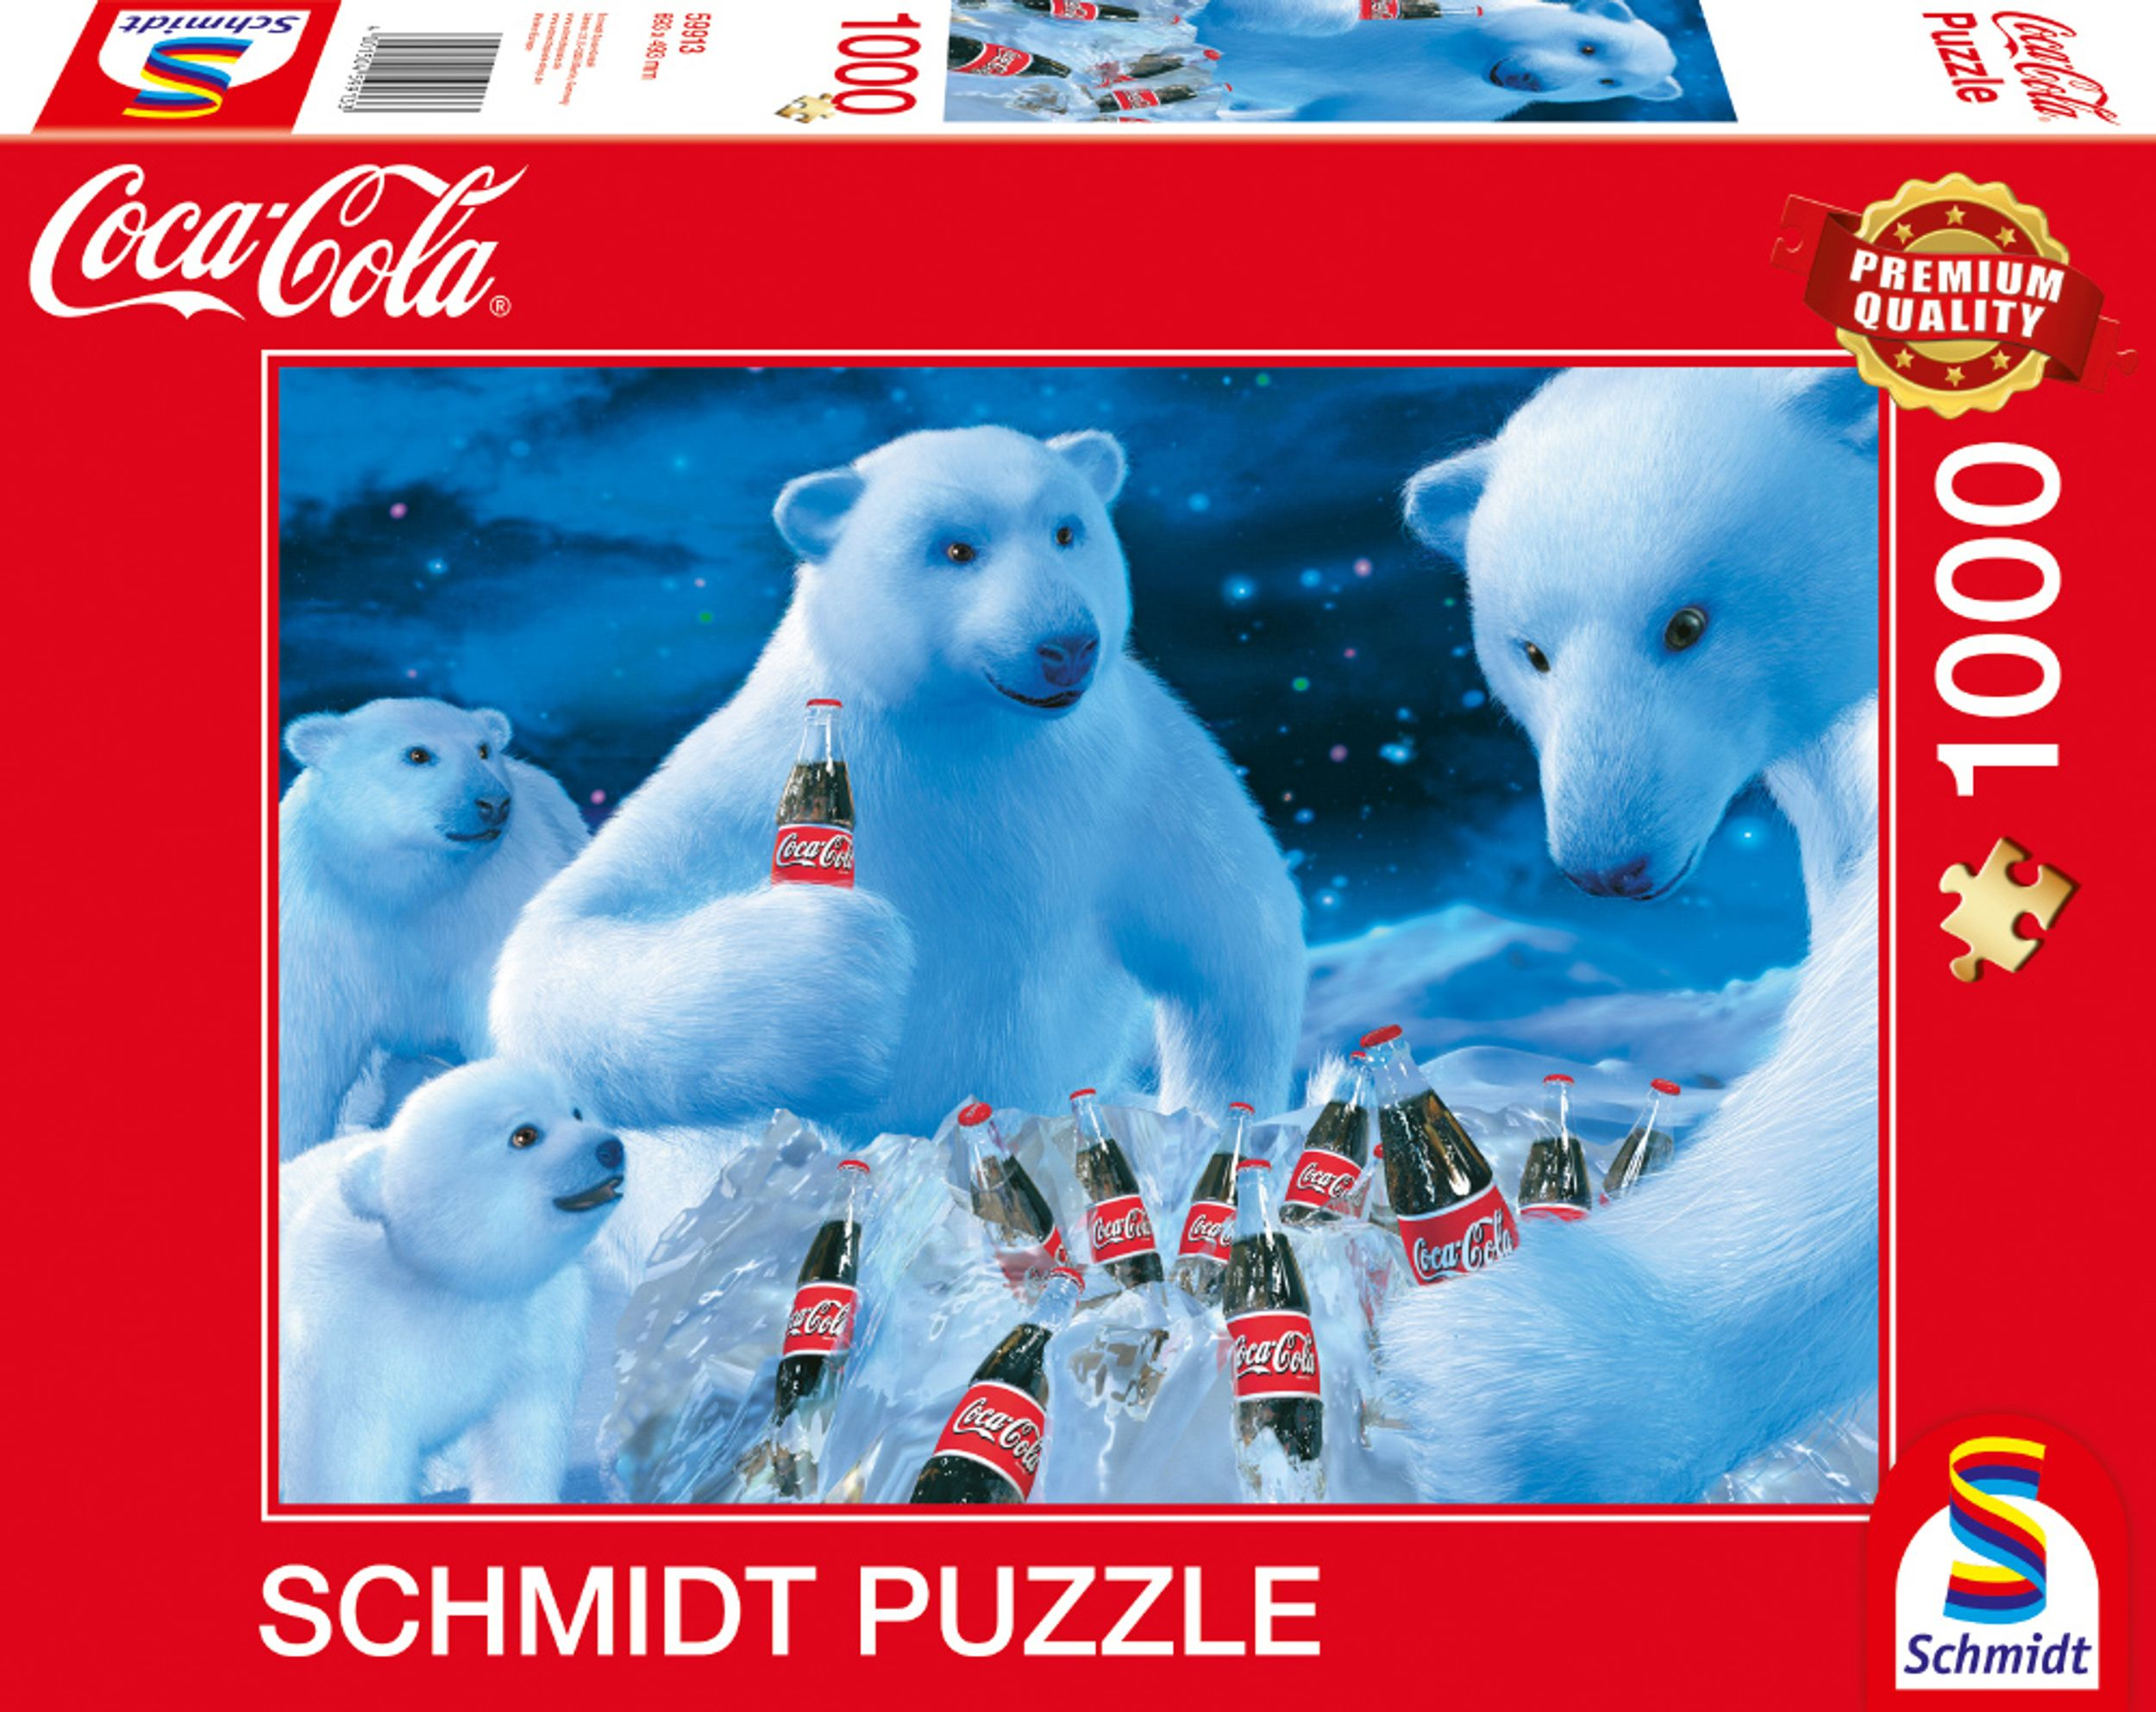 SCHMIDT SPIELE Coca Puzzle Cola Polarbären